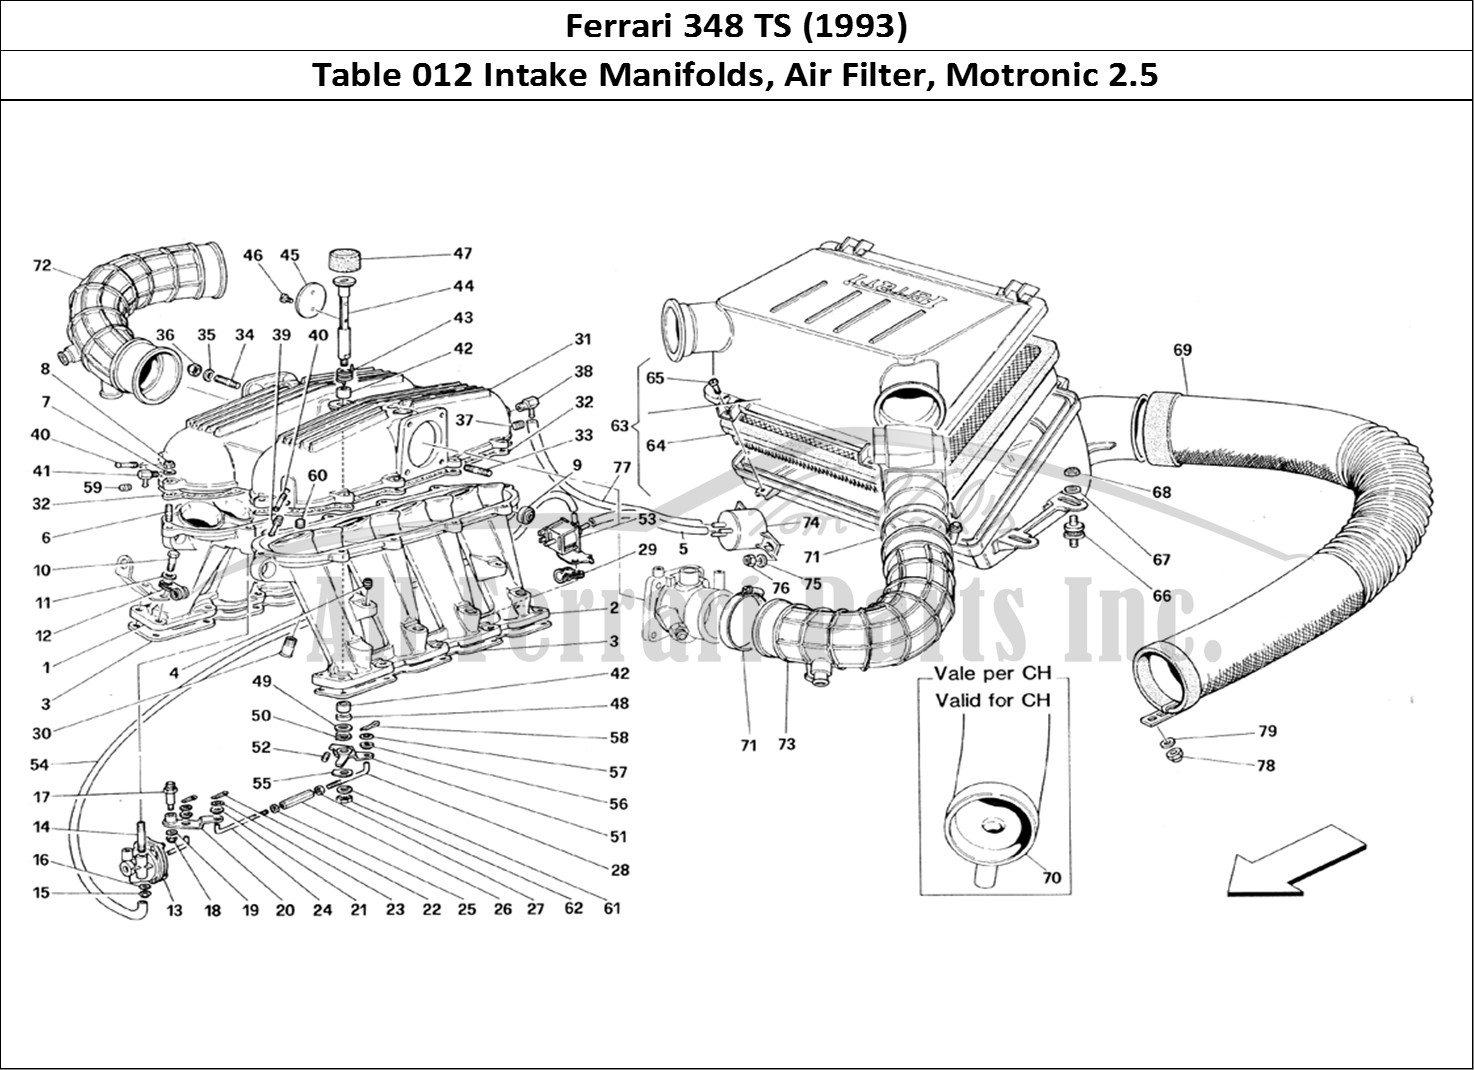 Ferrari Parts Ferrari 348 TB (1993) Page 012 Manifolds and Air Intake